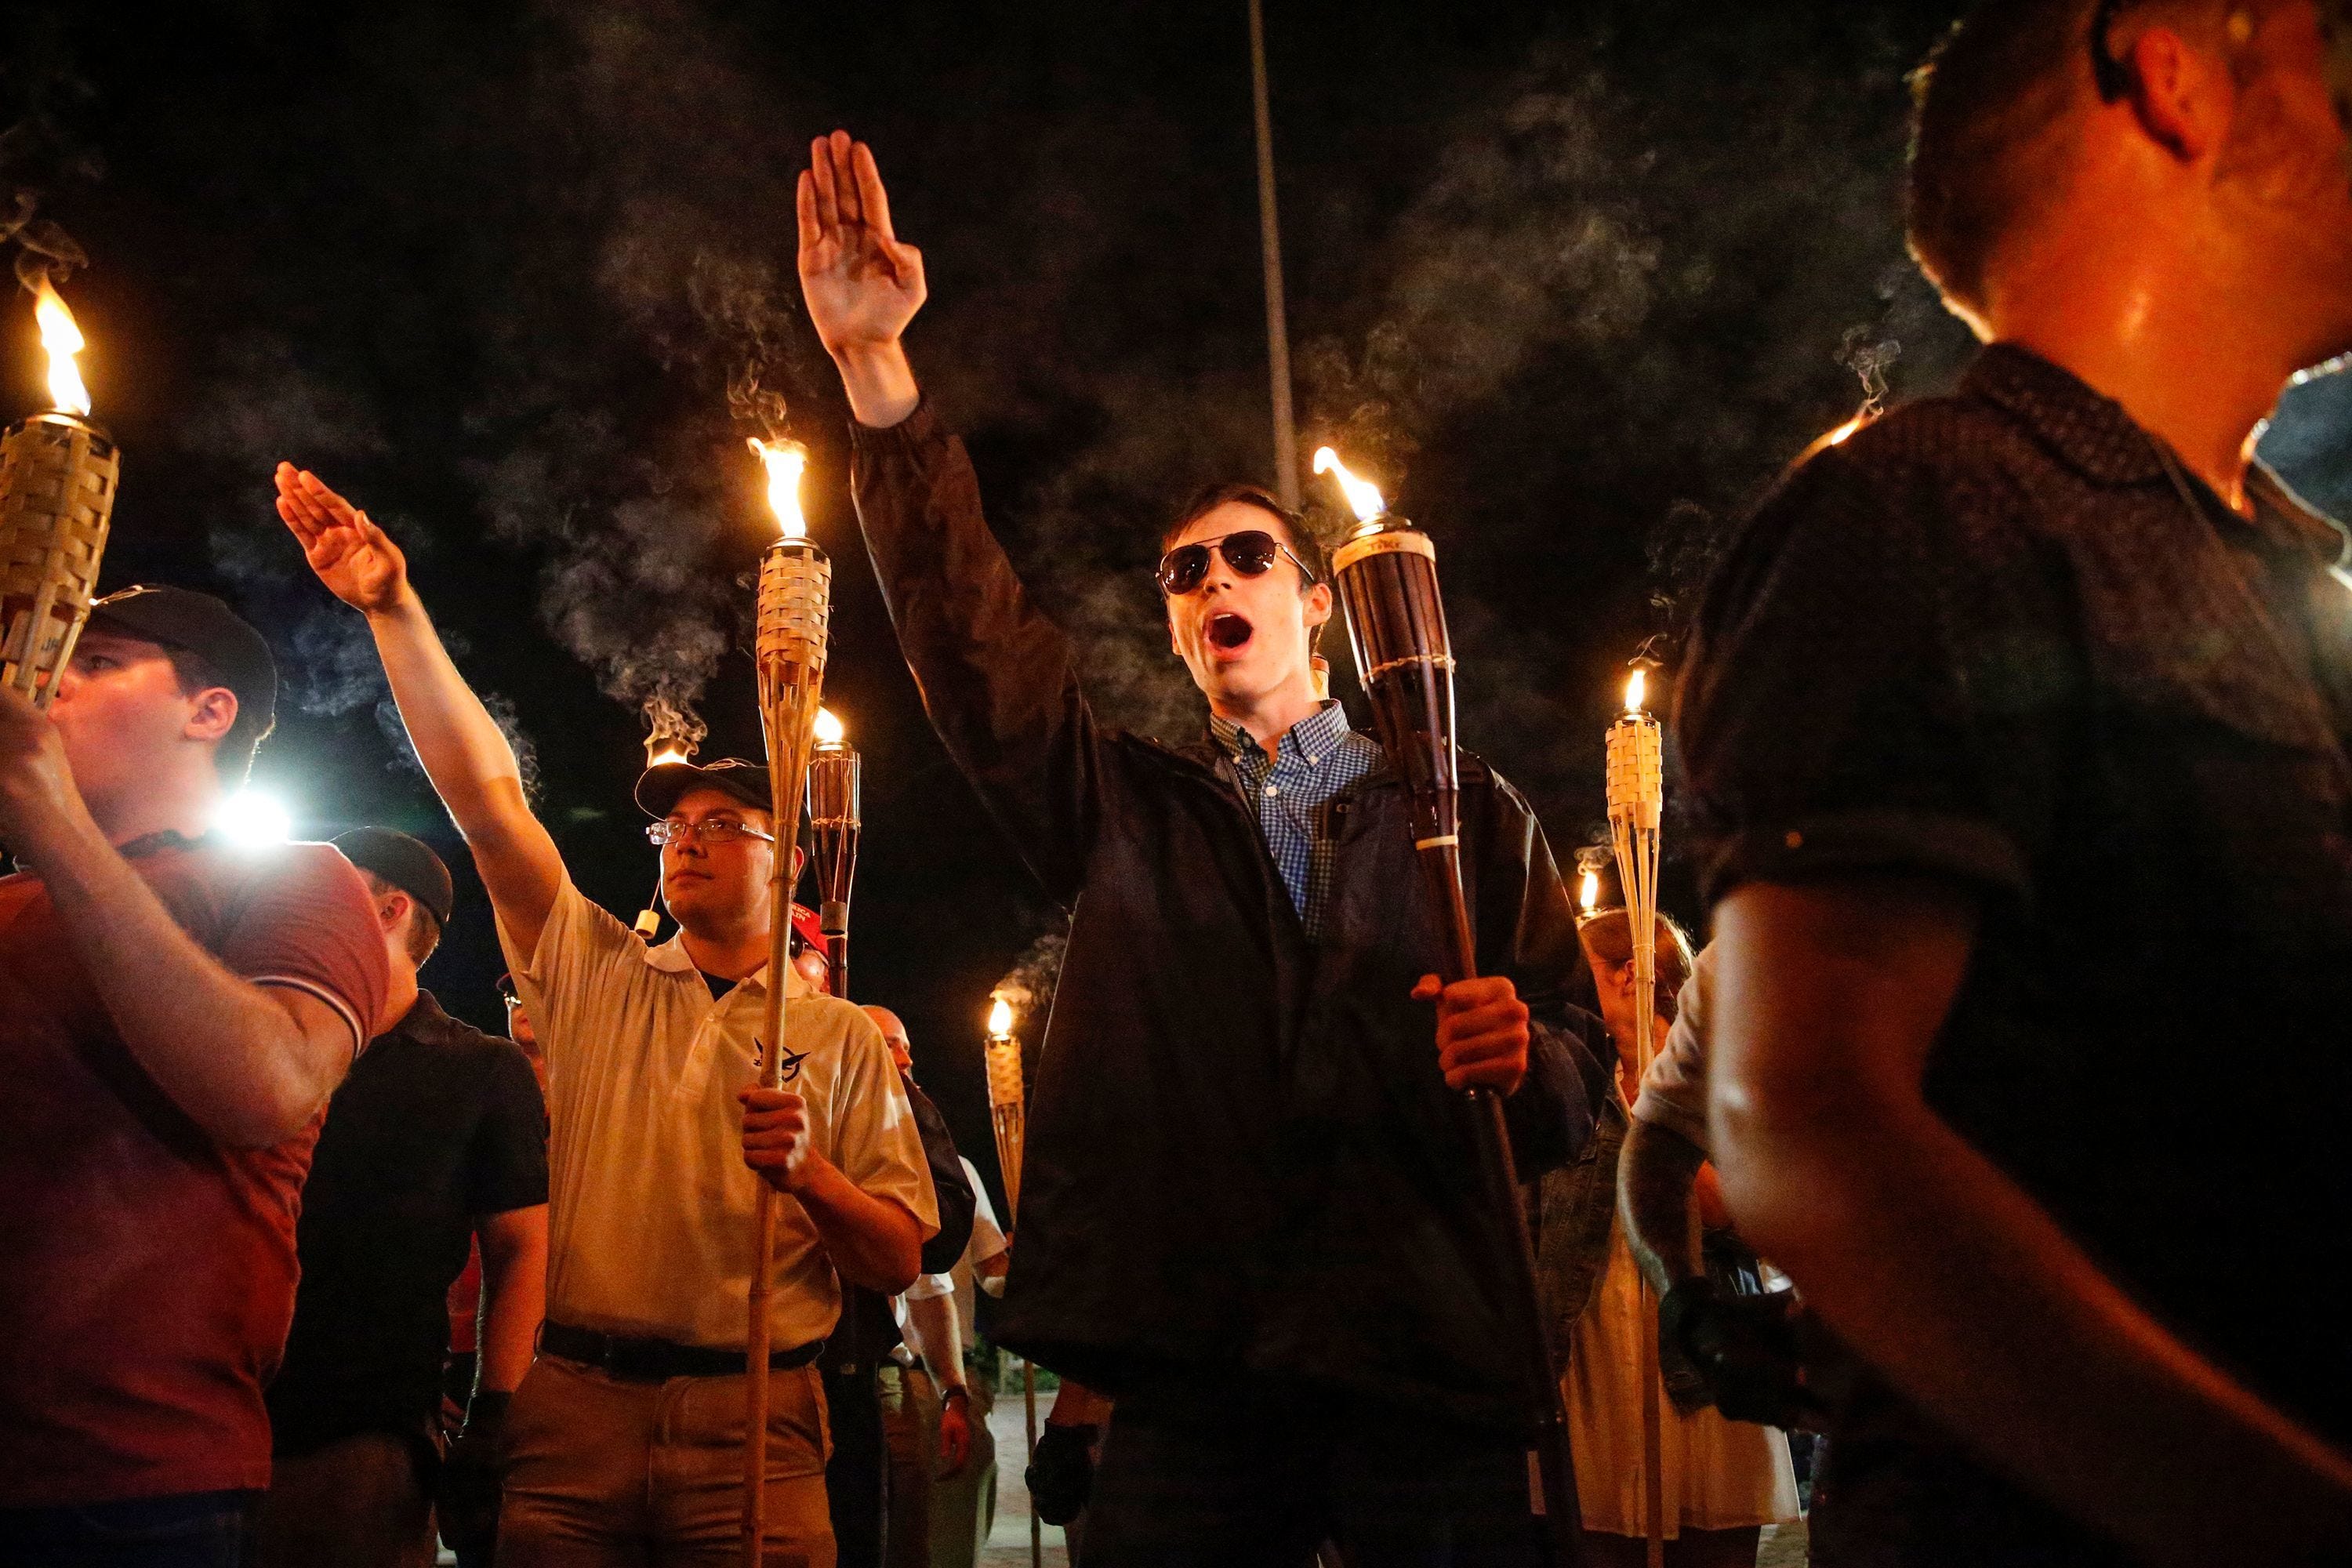 Georgia town braces for face off between neo-Nazi, anti-fascist groups